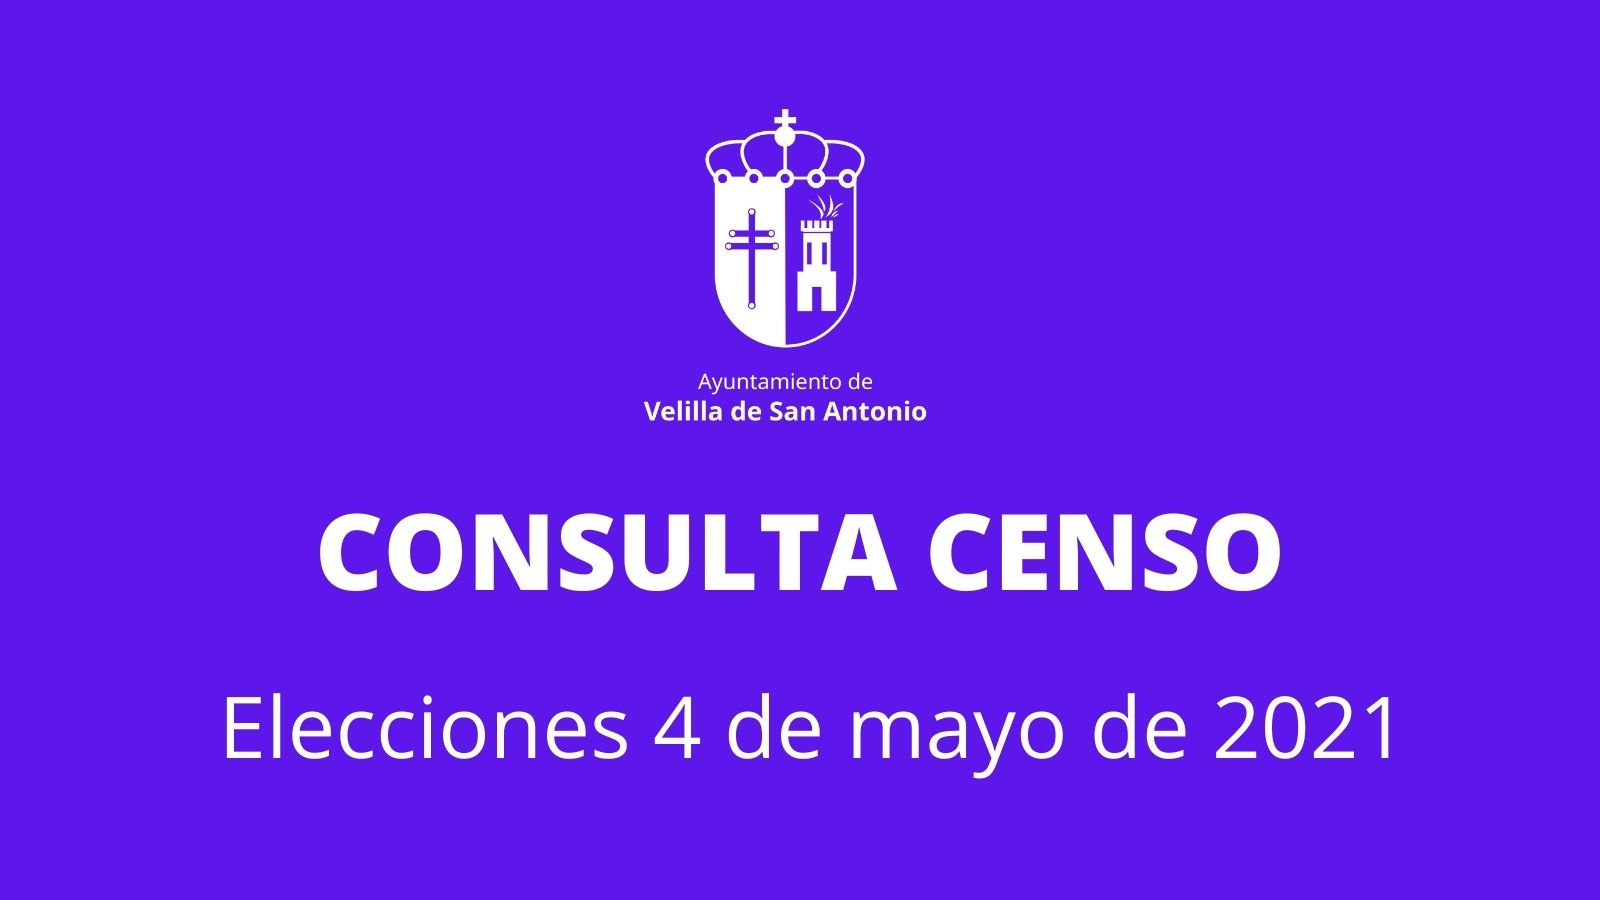 Consulta censo elecciones 4 de mayo